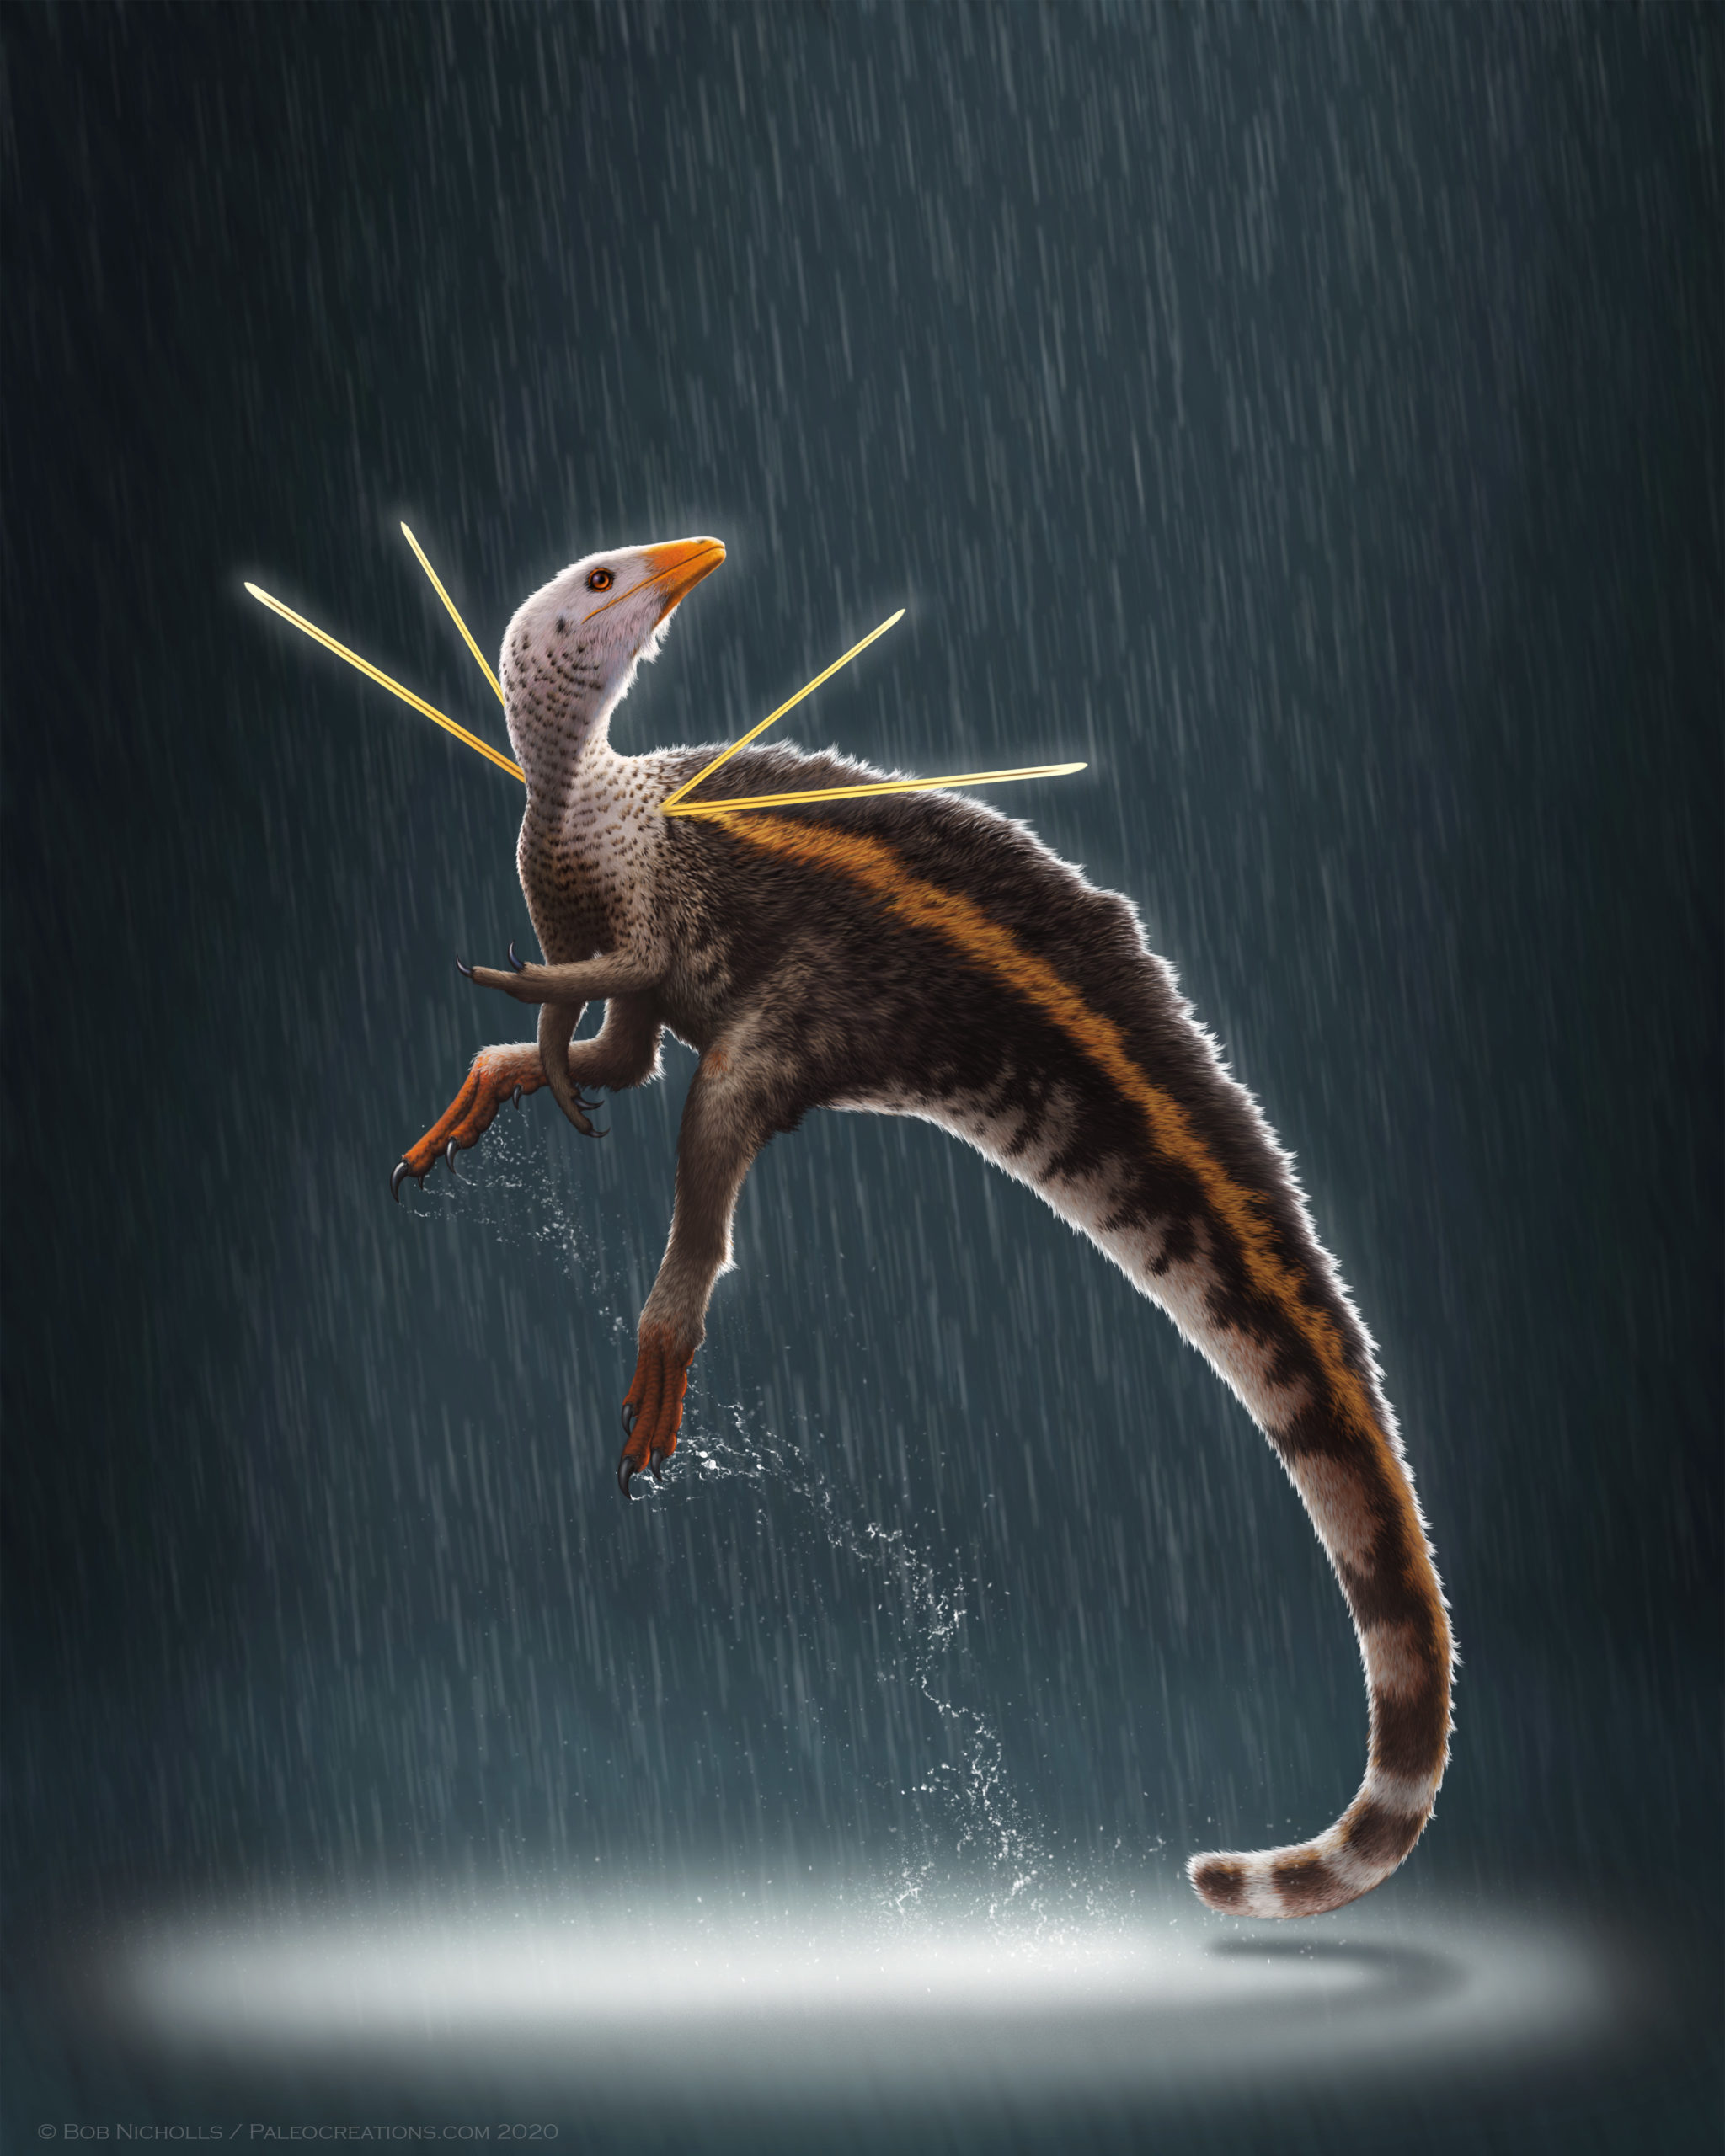 Ubirajara jubatus (Illustration: © Bob Nicholls / Paleocreations.com 2020)